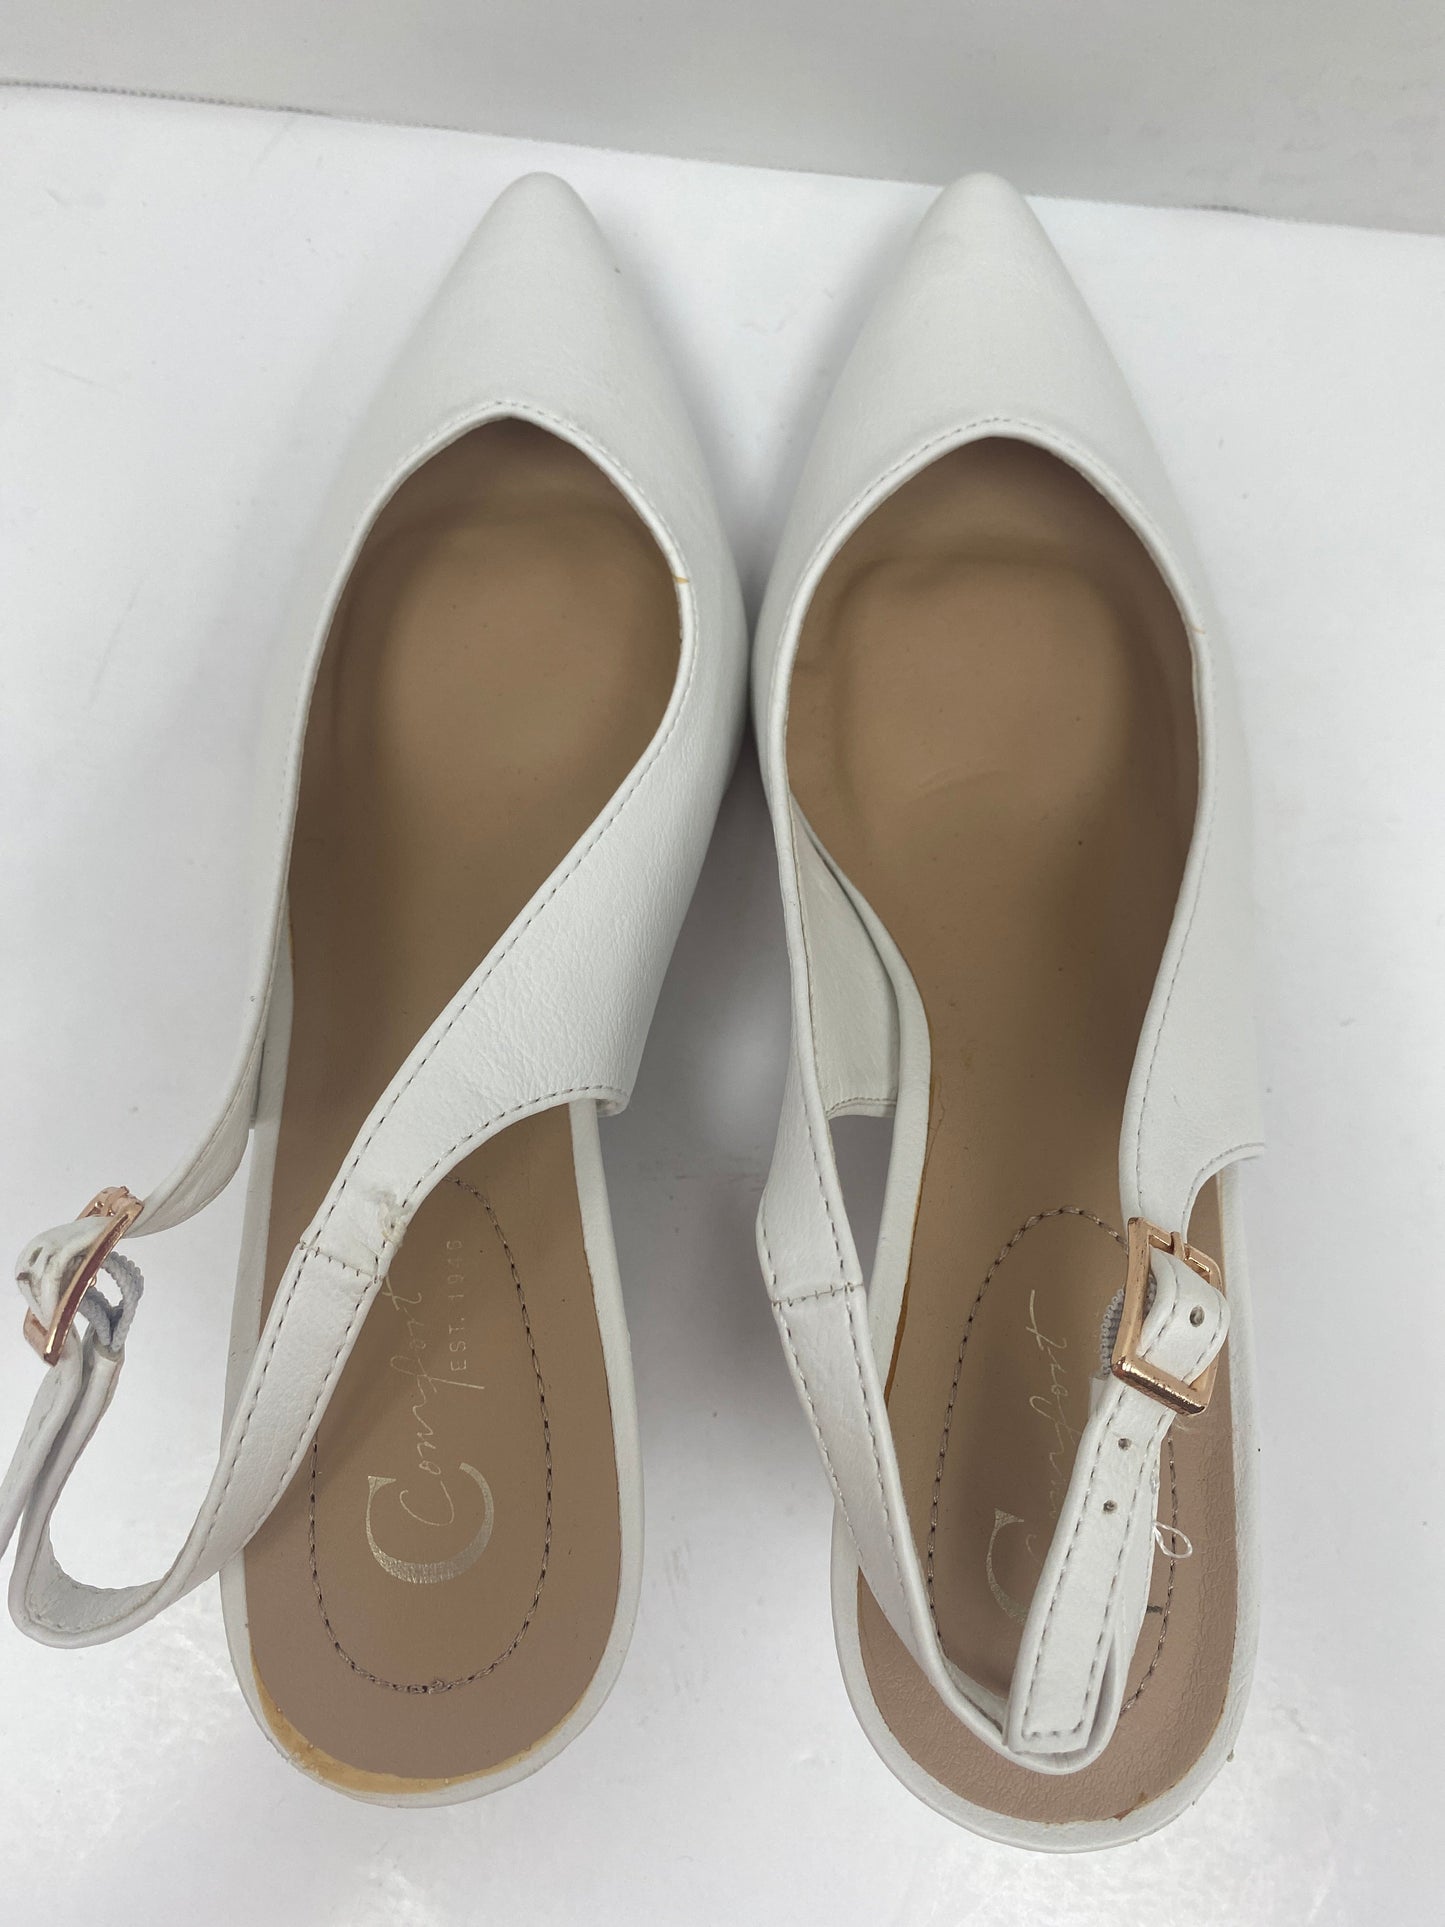 White Shoes Heels Kitten Cato, Size 8